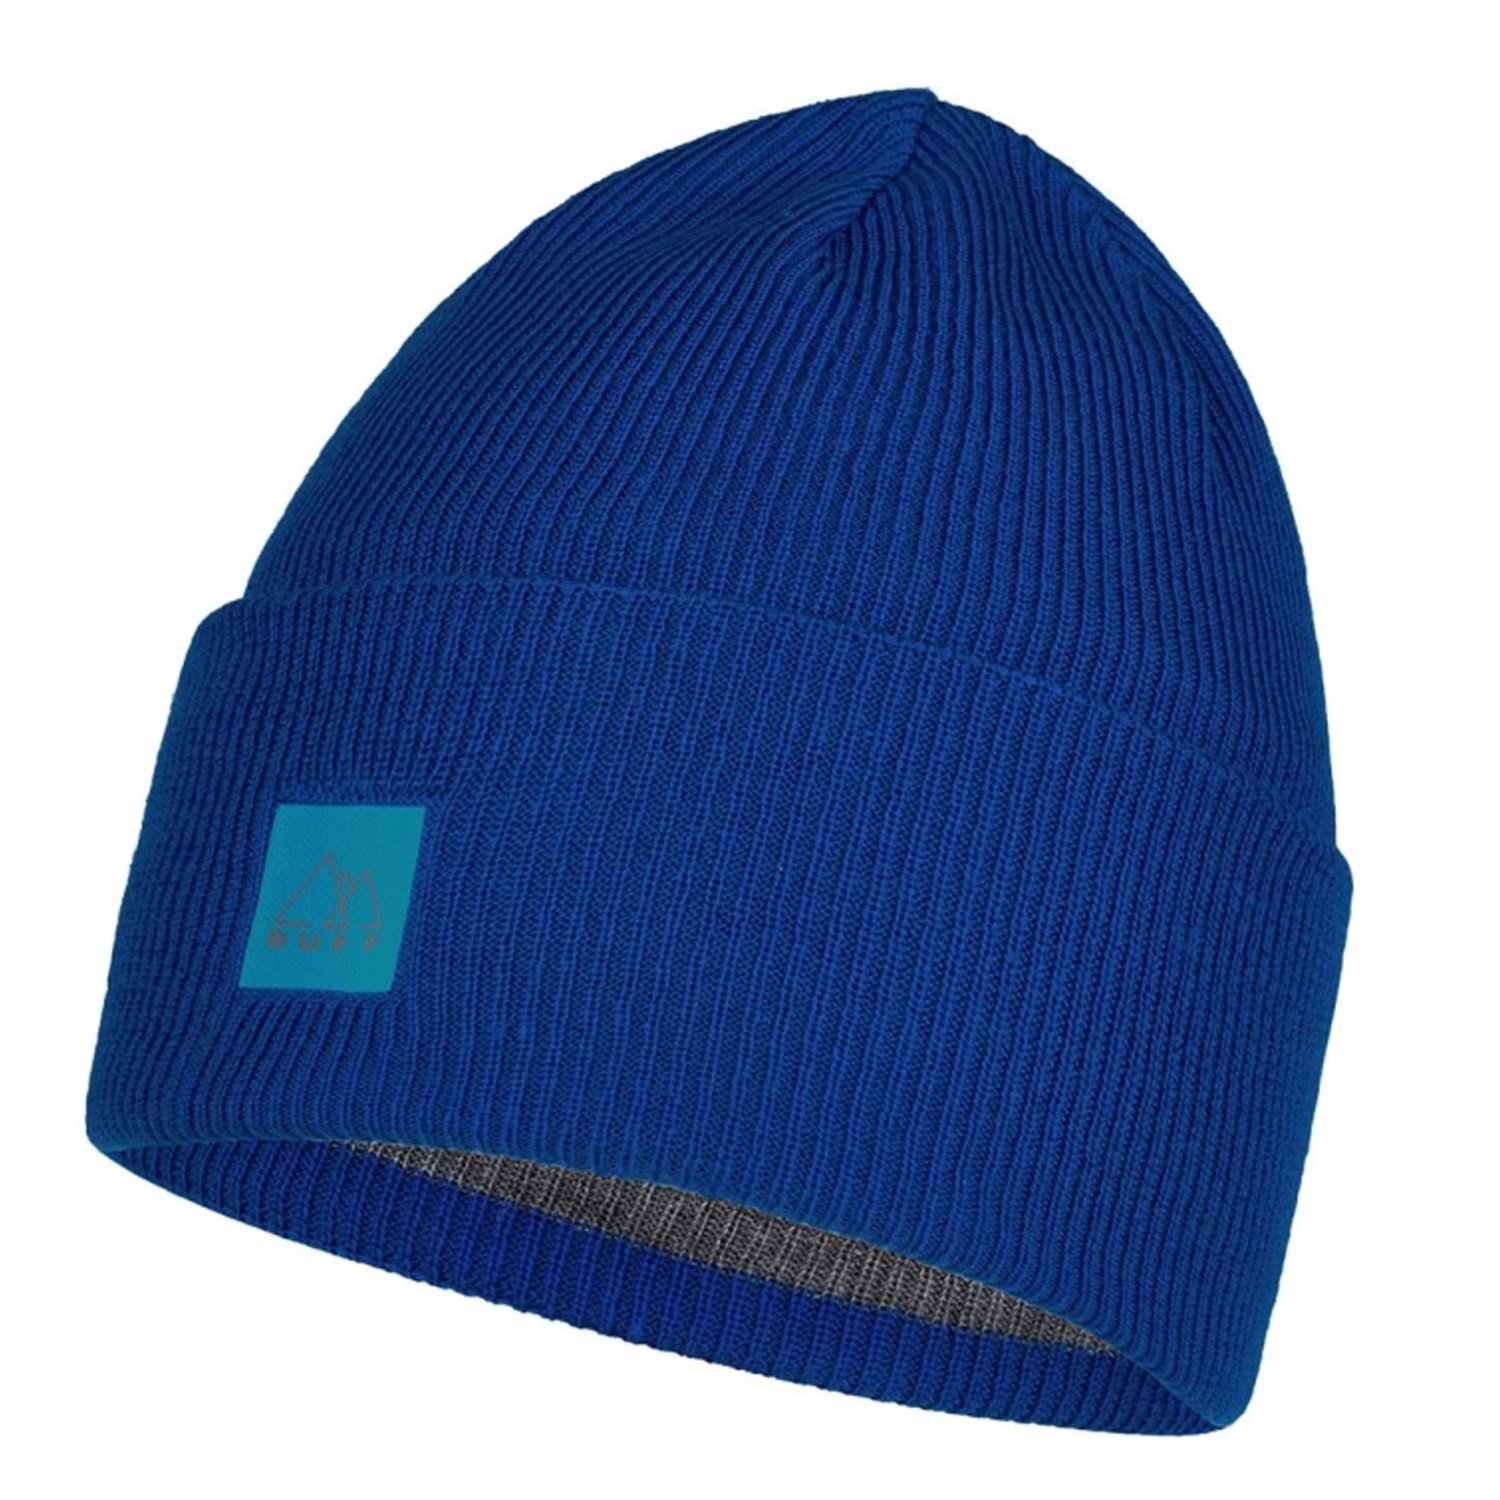 Шапка Buff Crossknit Hat Night, US:one size, синий, 132891.779.10.00 панама женская однотонная minaku синий р р 56 58